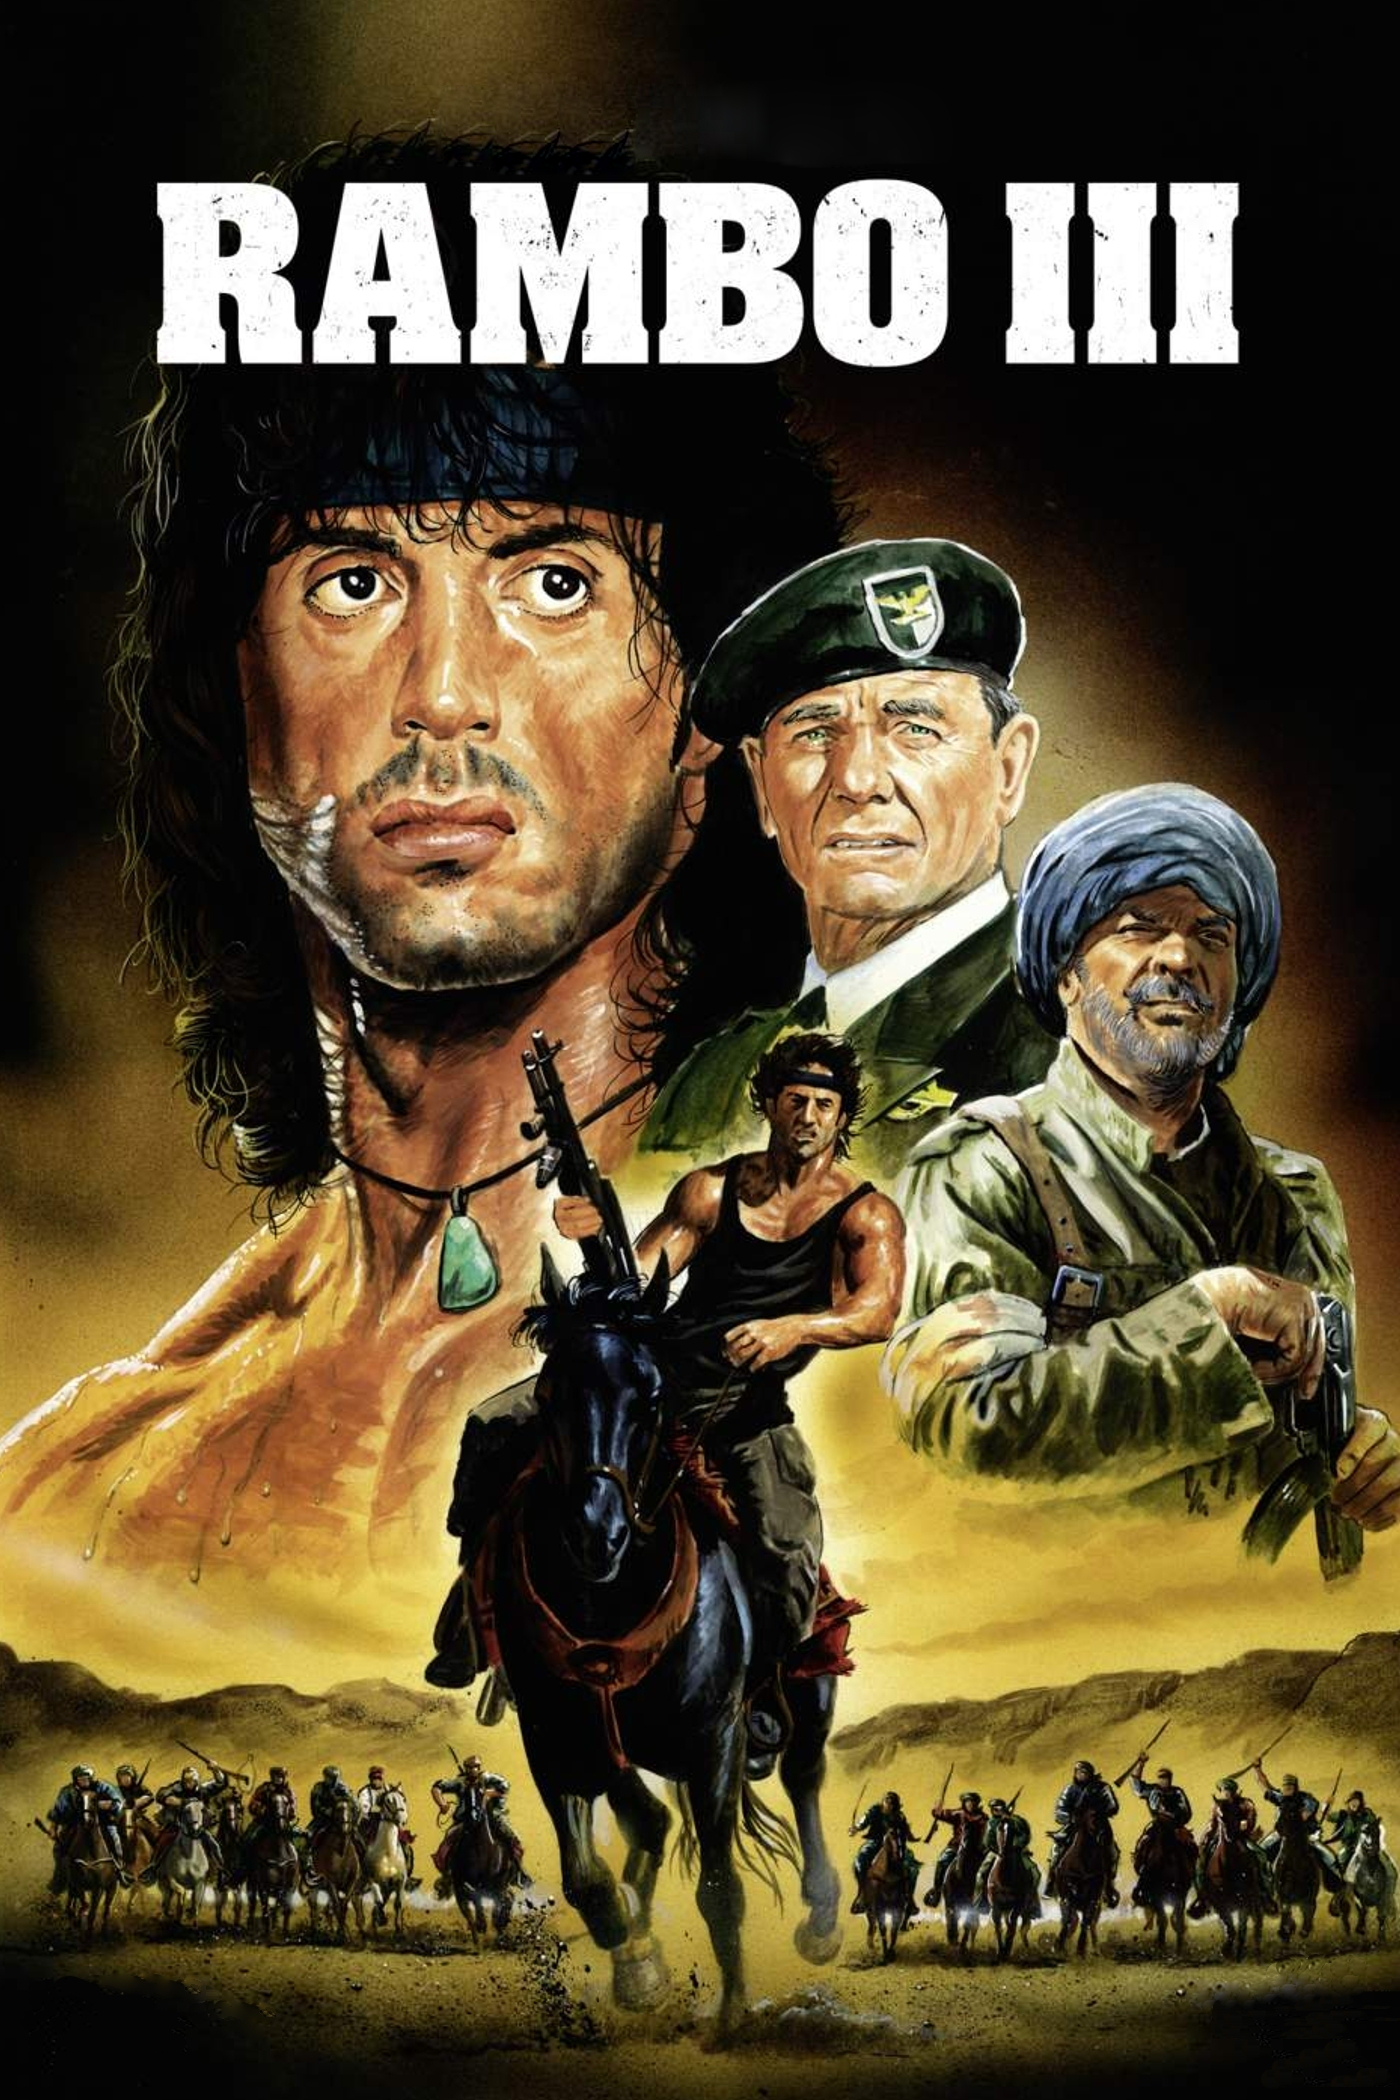 Plakat von "Rambo III"